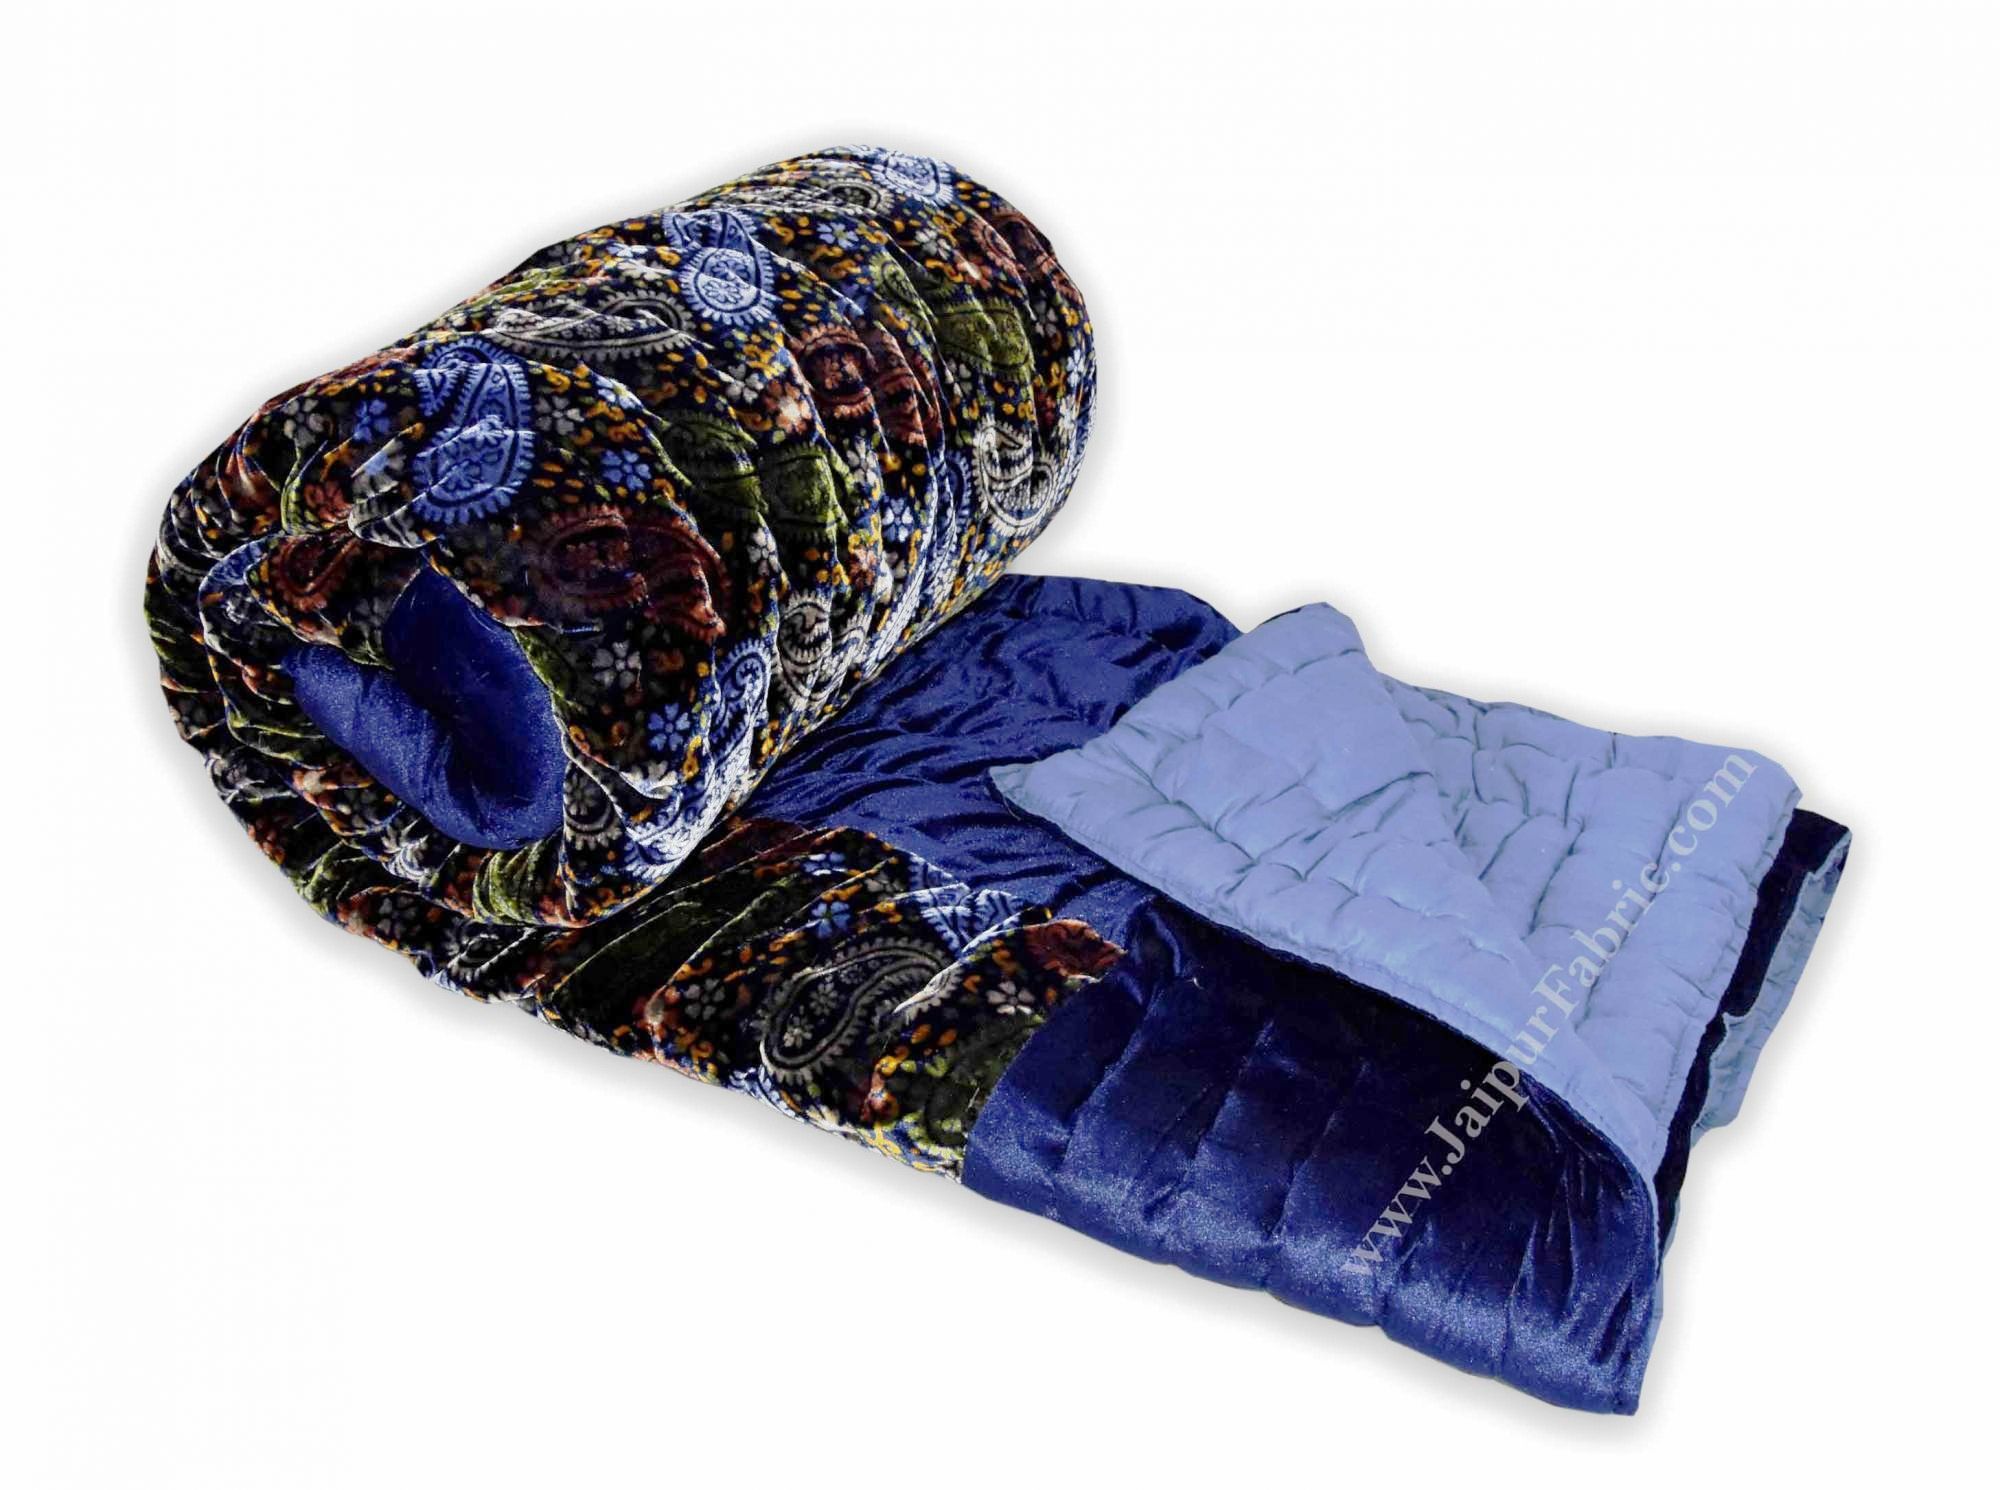 Velvet Cloth Double Bed Quilt Jaipuri Razai blue Shaneel Rajai by Jaipur Fabric